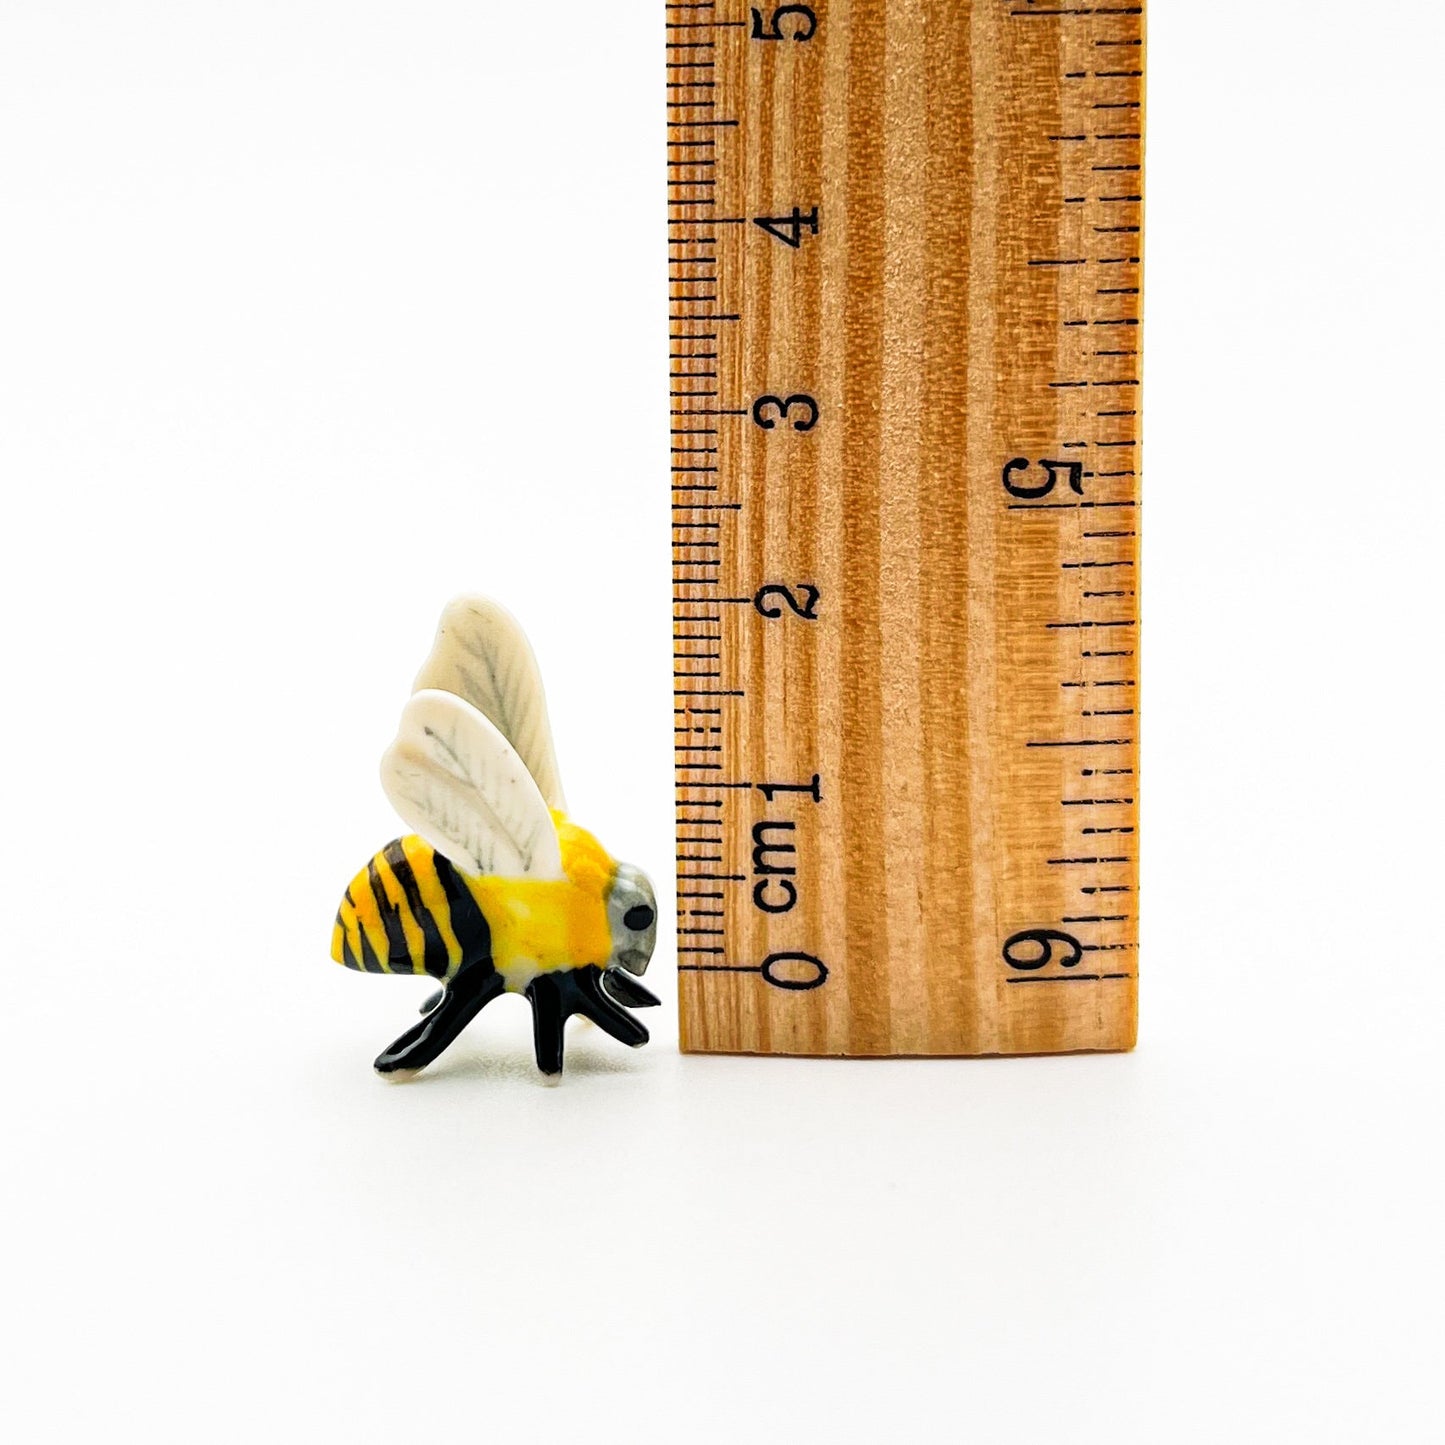 Bee Figurine